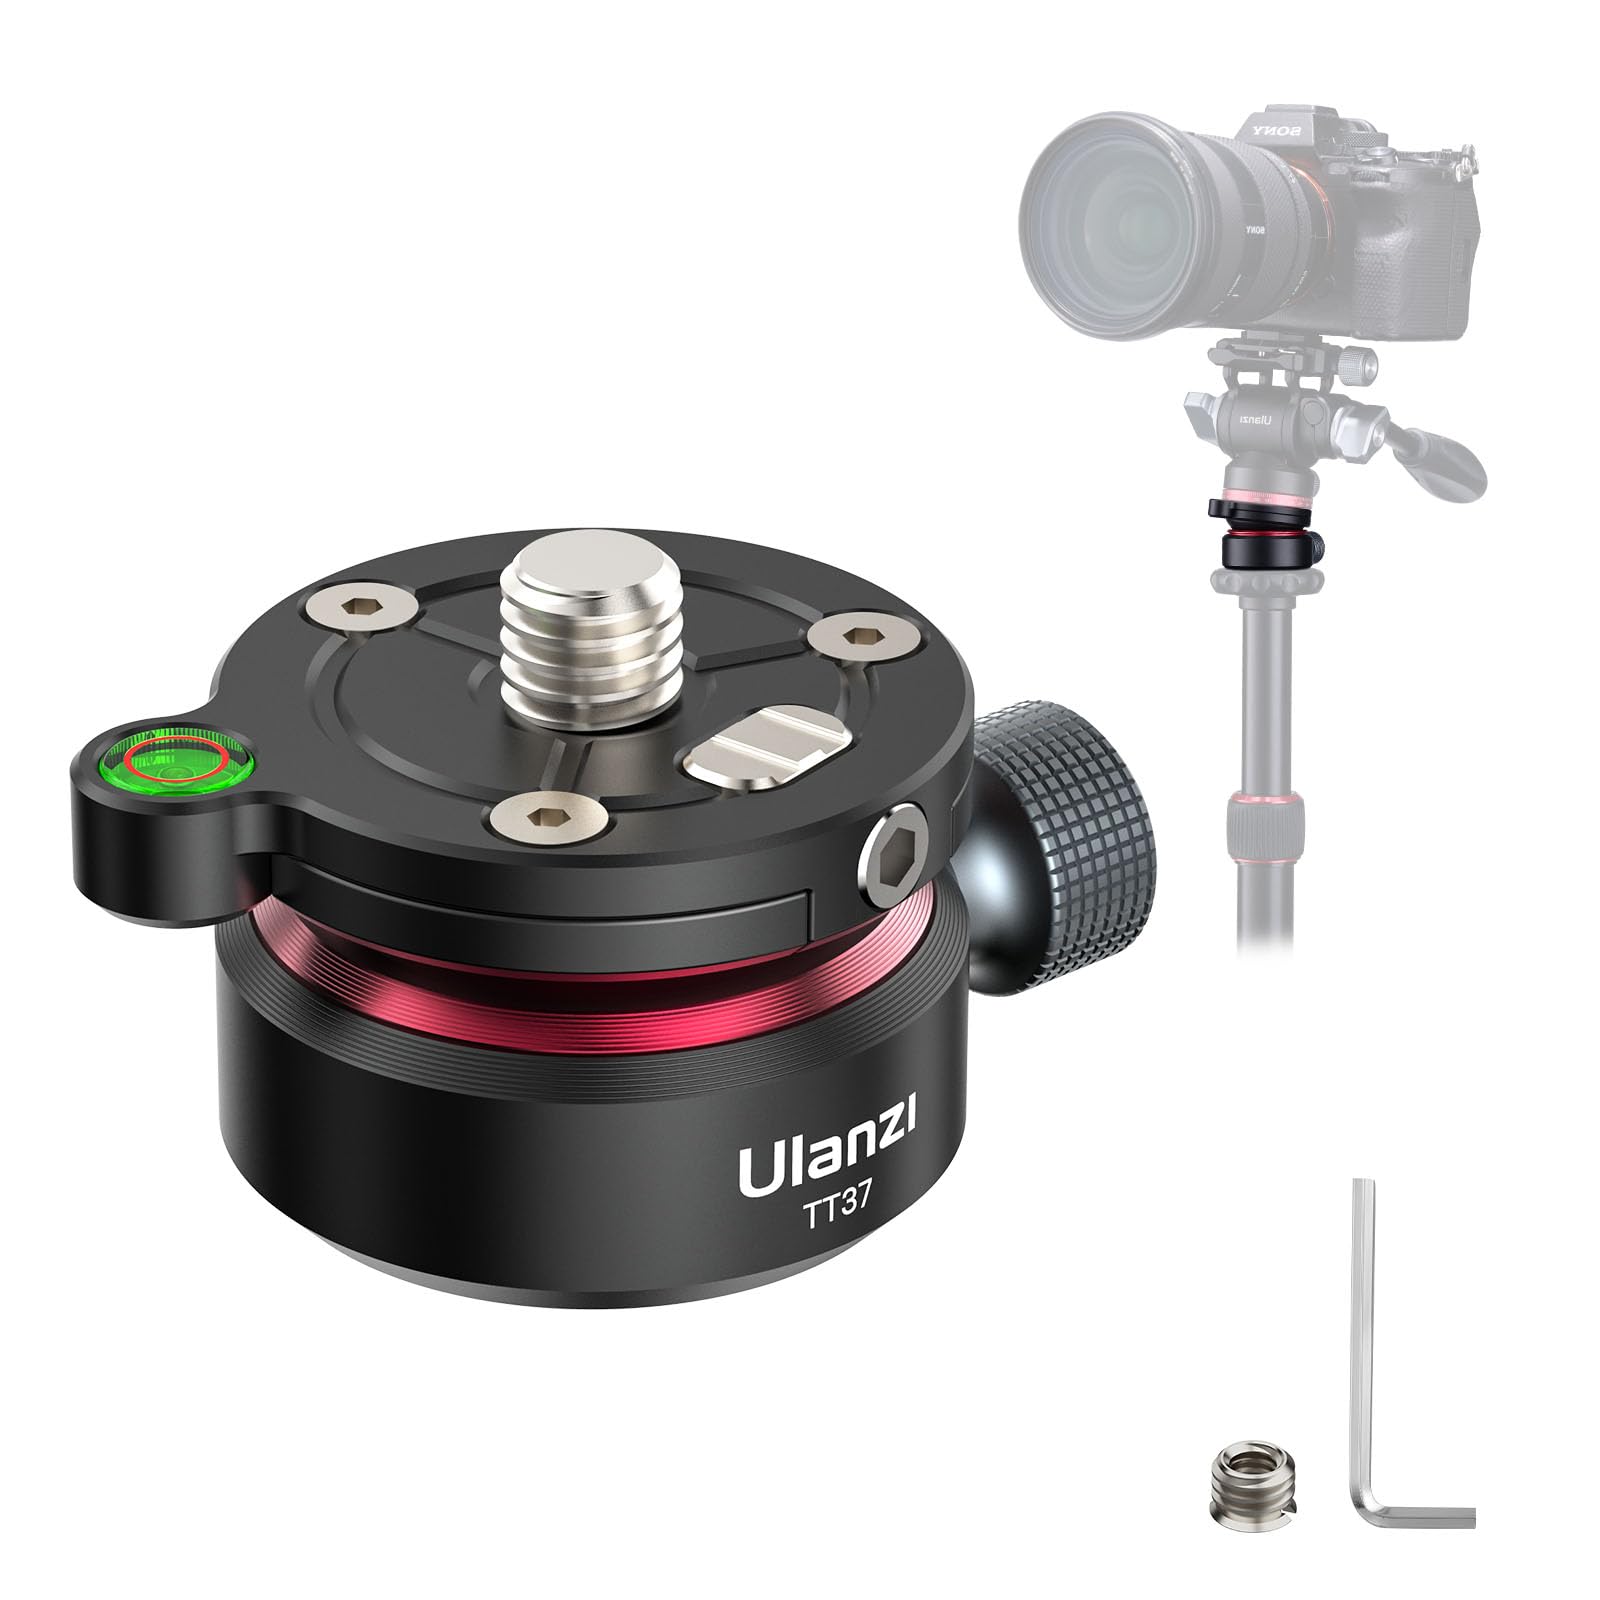 RA:Ulanzi レベリングベース カメラレベラー 低重心 雲台 アルミニウム合金製 +/-8°の正確な角度調整 レベラーアジャストプレート 最大耐荷重10KG 気泡水準器付 3/8"取り付けネジ バブル水準器 DSLRカメラカムコーダーに対応